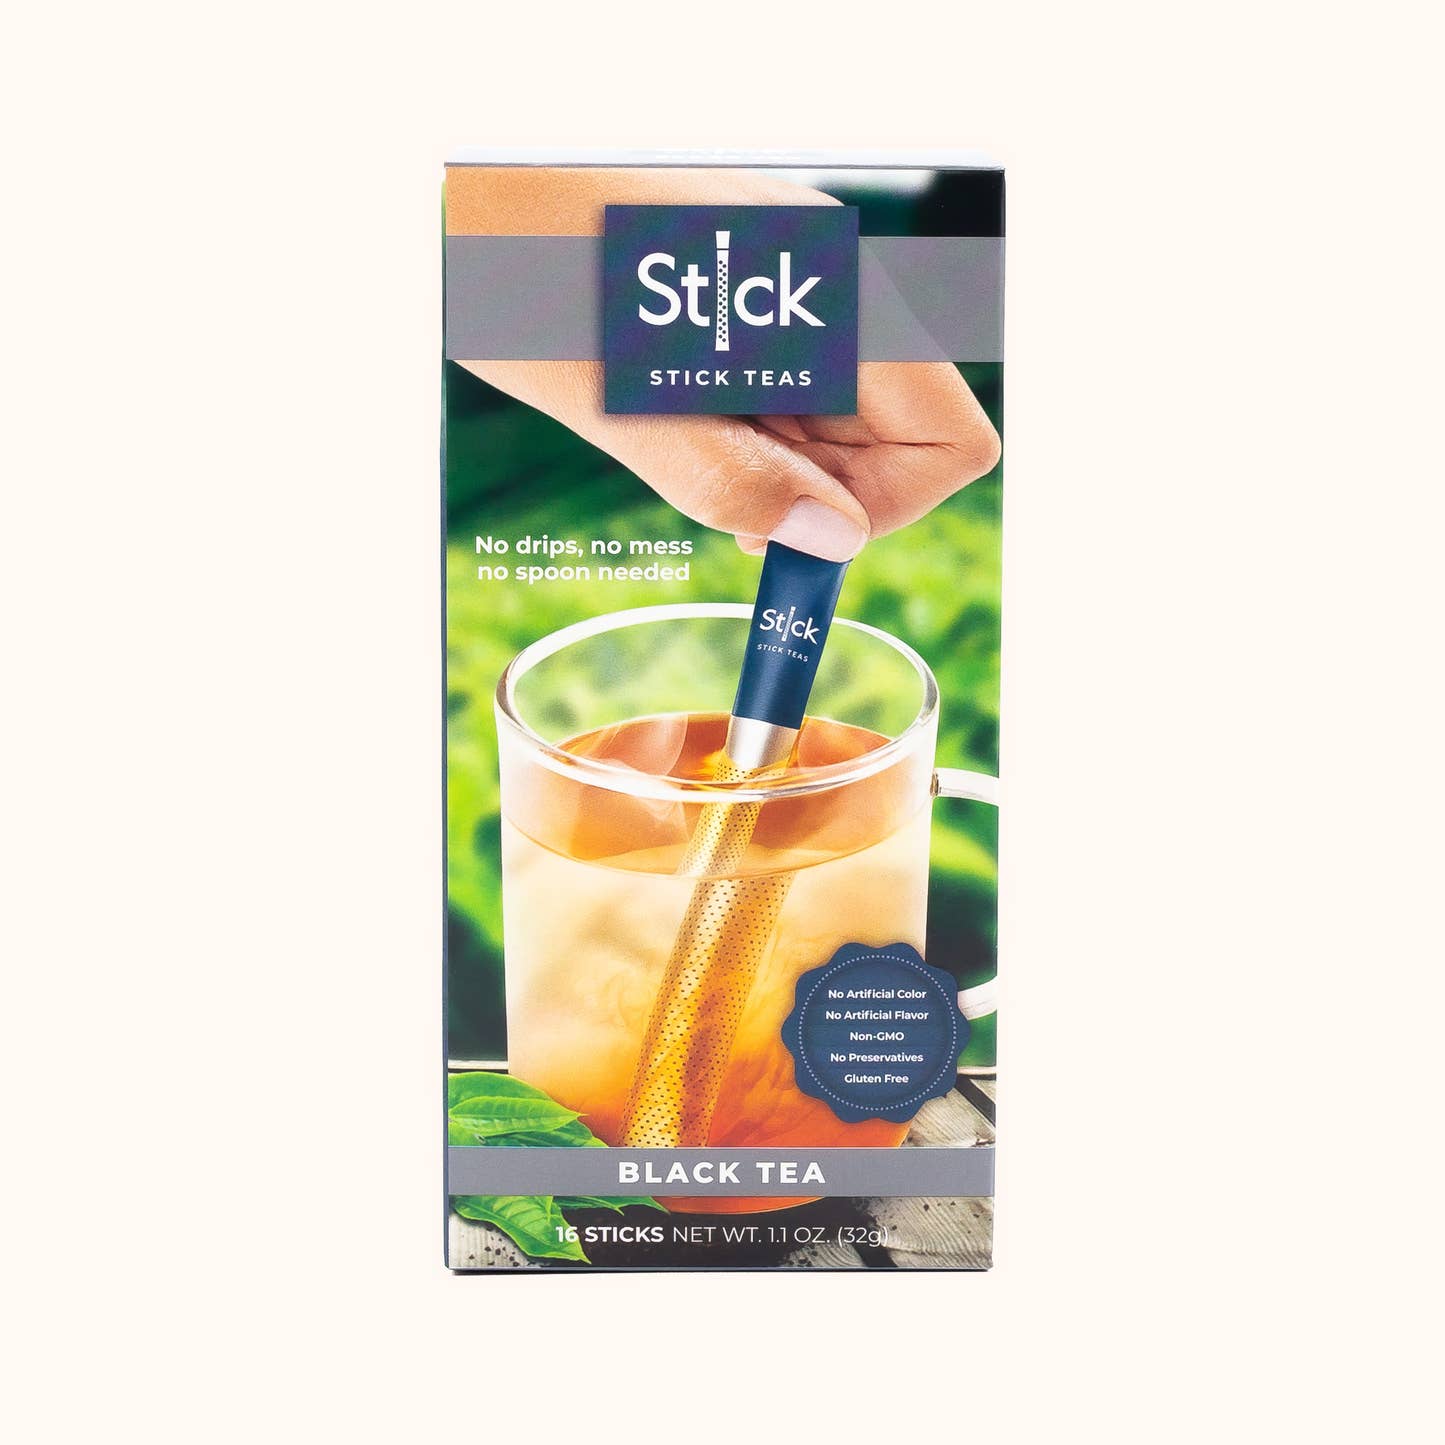 Stick Beverages Black Tea box